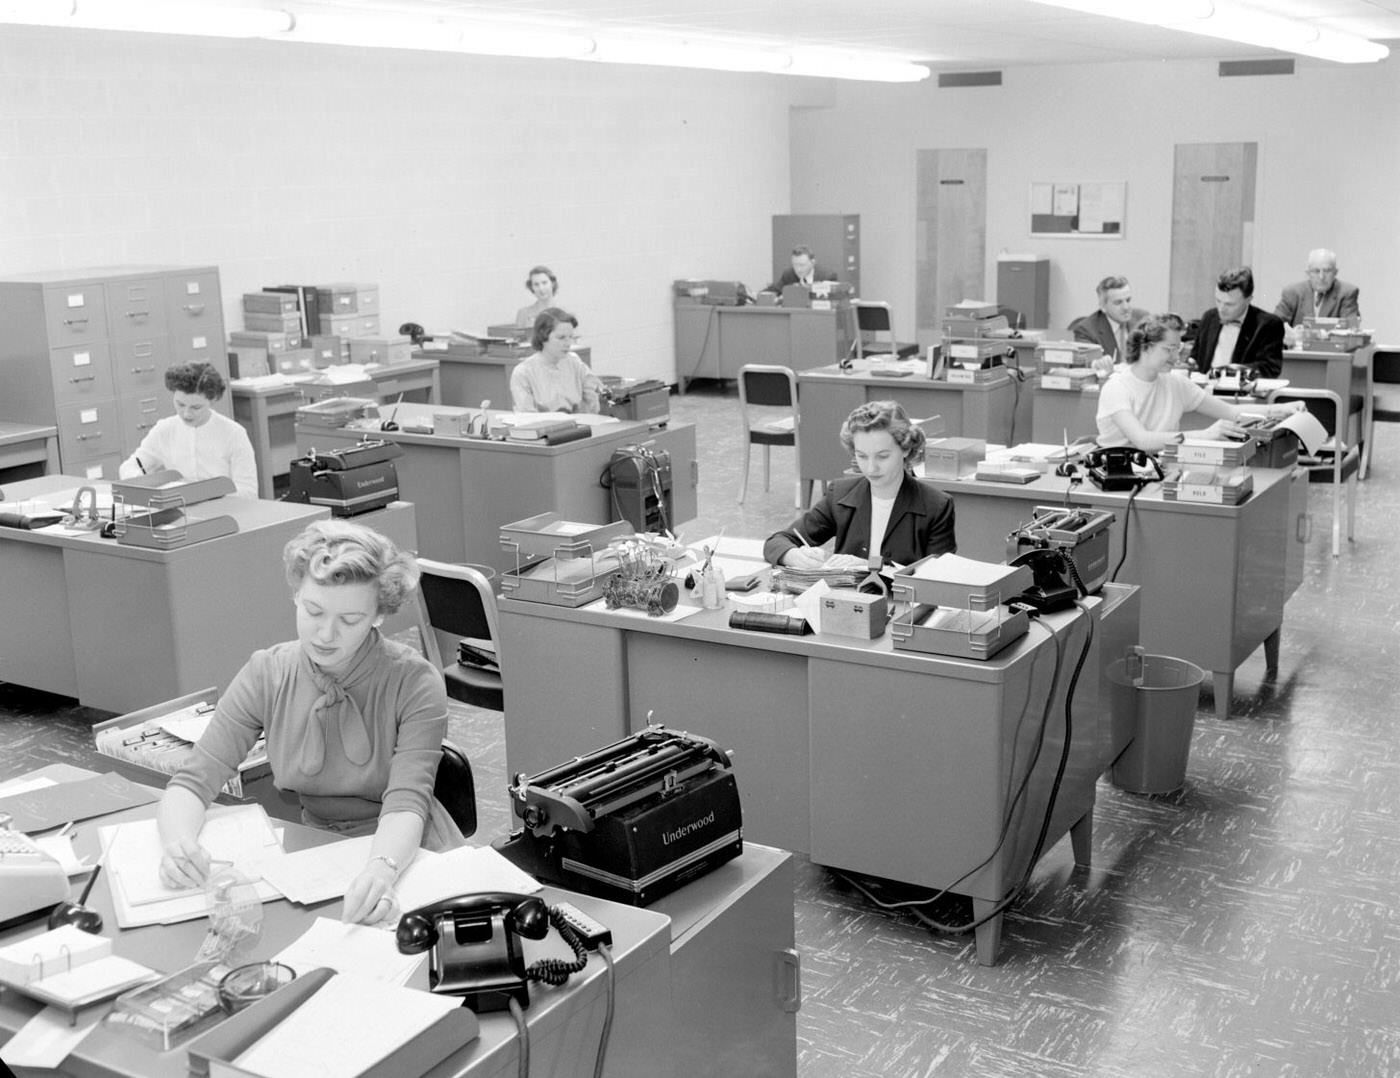 Inside Texas Employees Insurance Association Office, 1955.